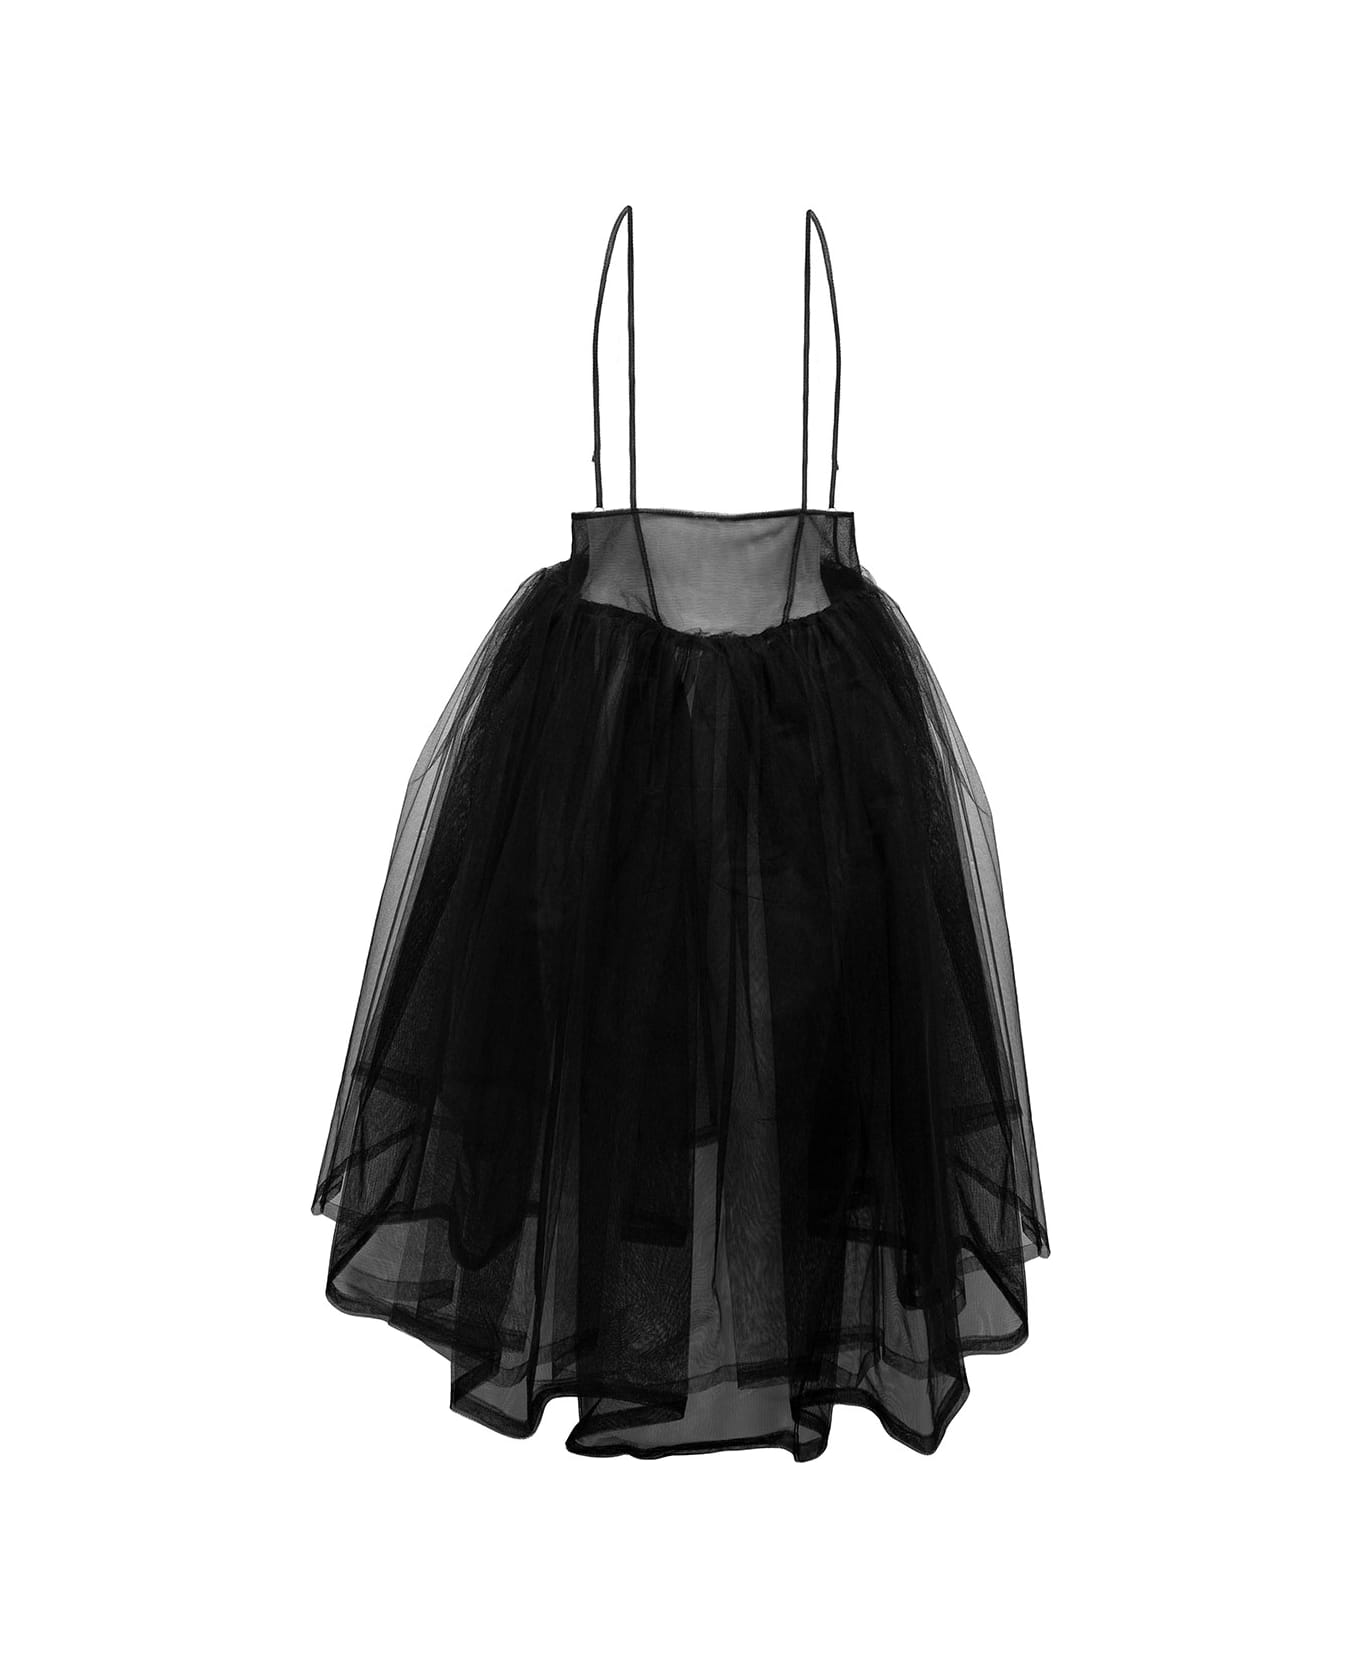 Noir Kei Ninomiya Black Nylon Tulle Skirt With Suspenders Woman Noir Kei Ninomiya - Black